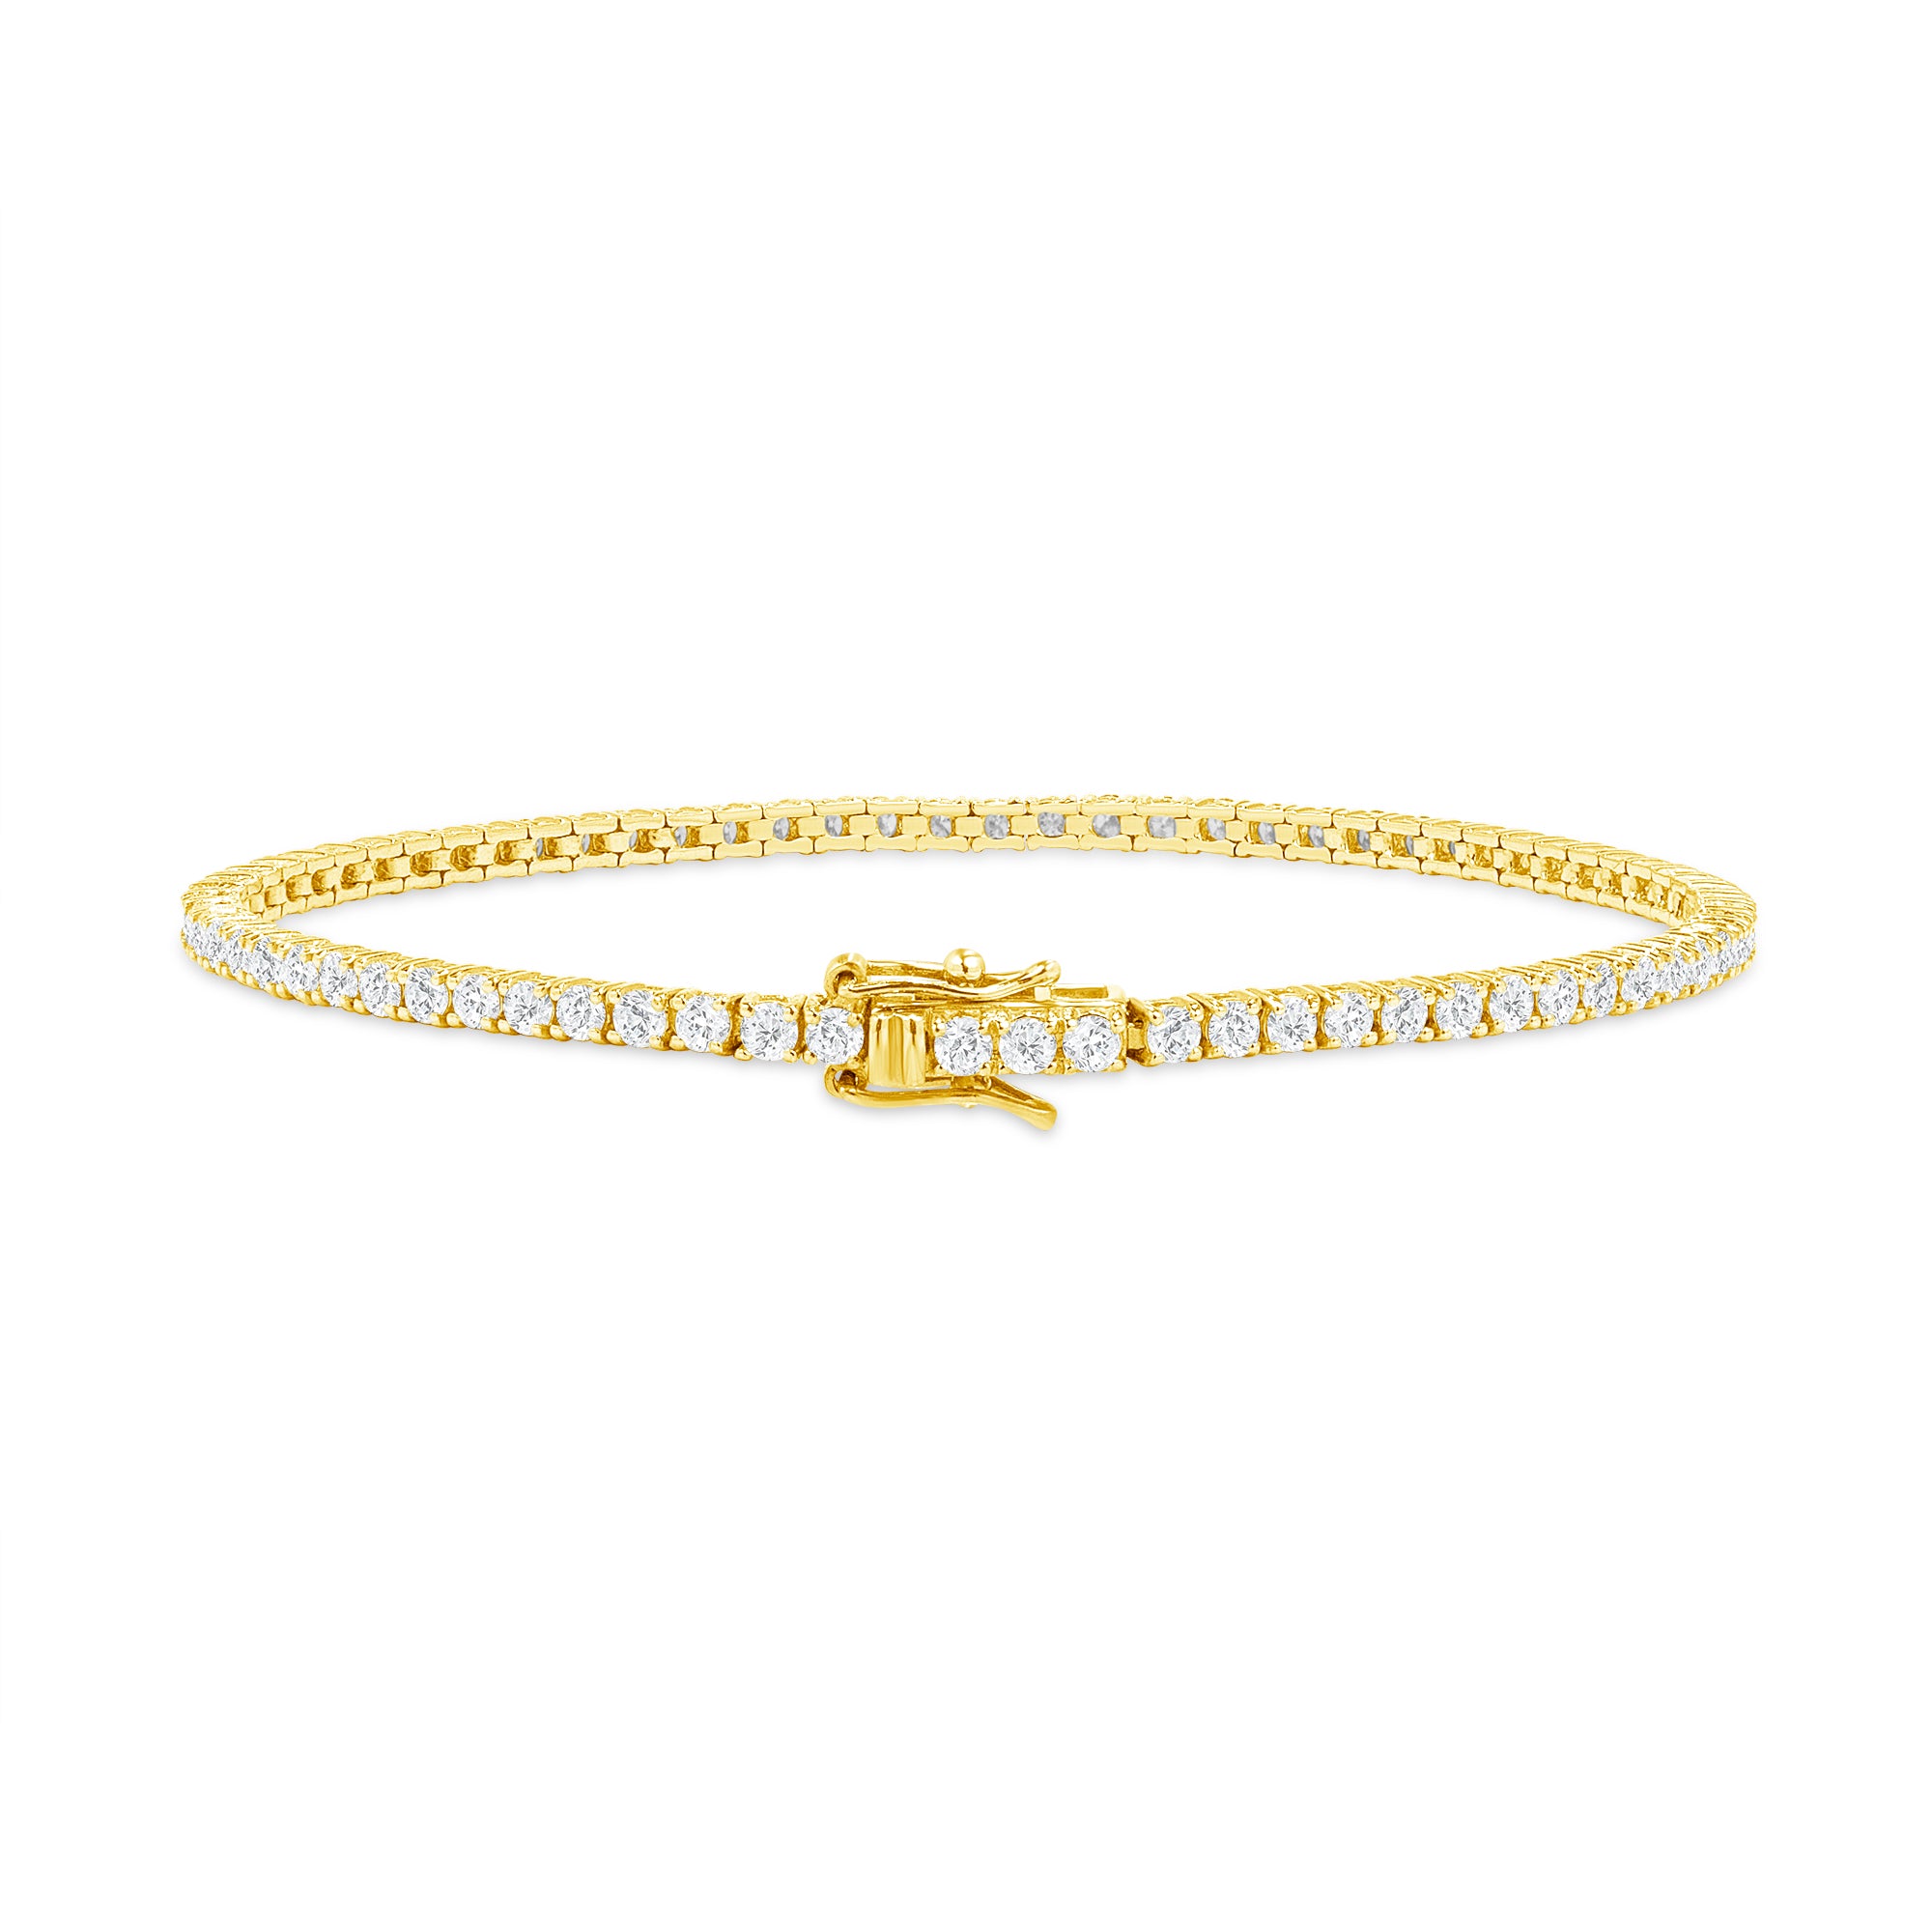 2.52ctw Round Brilliant Cut Diamond Tennis Bracelet in 18K Yellow Gold